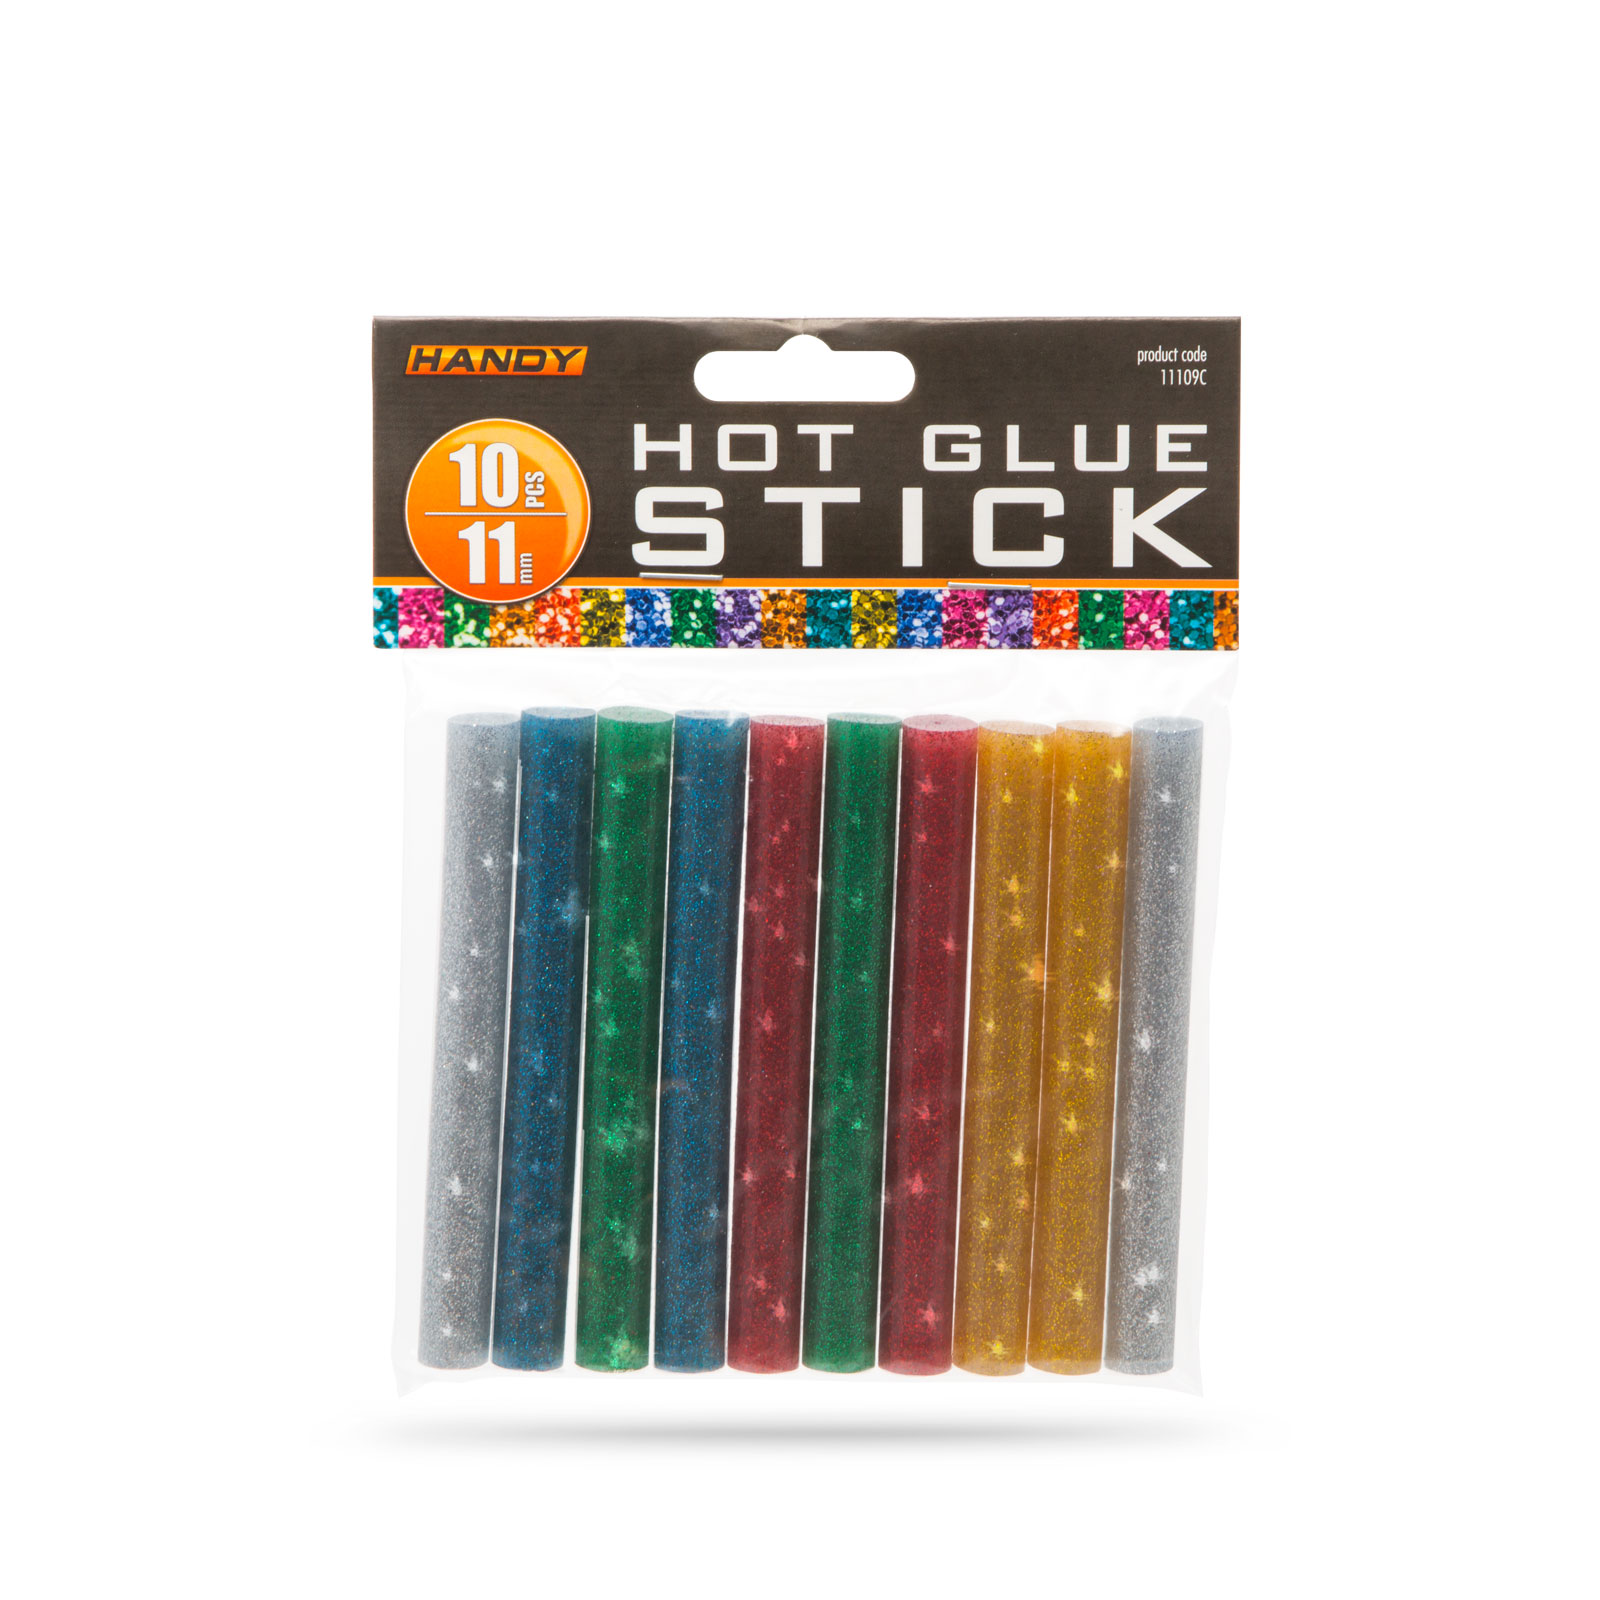 Hot glue stick - 11 mm - colorful, glittering thumb